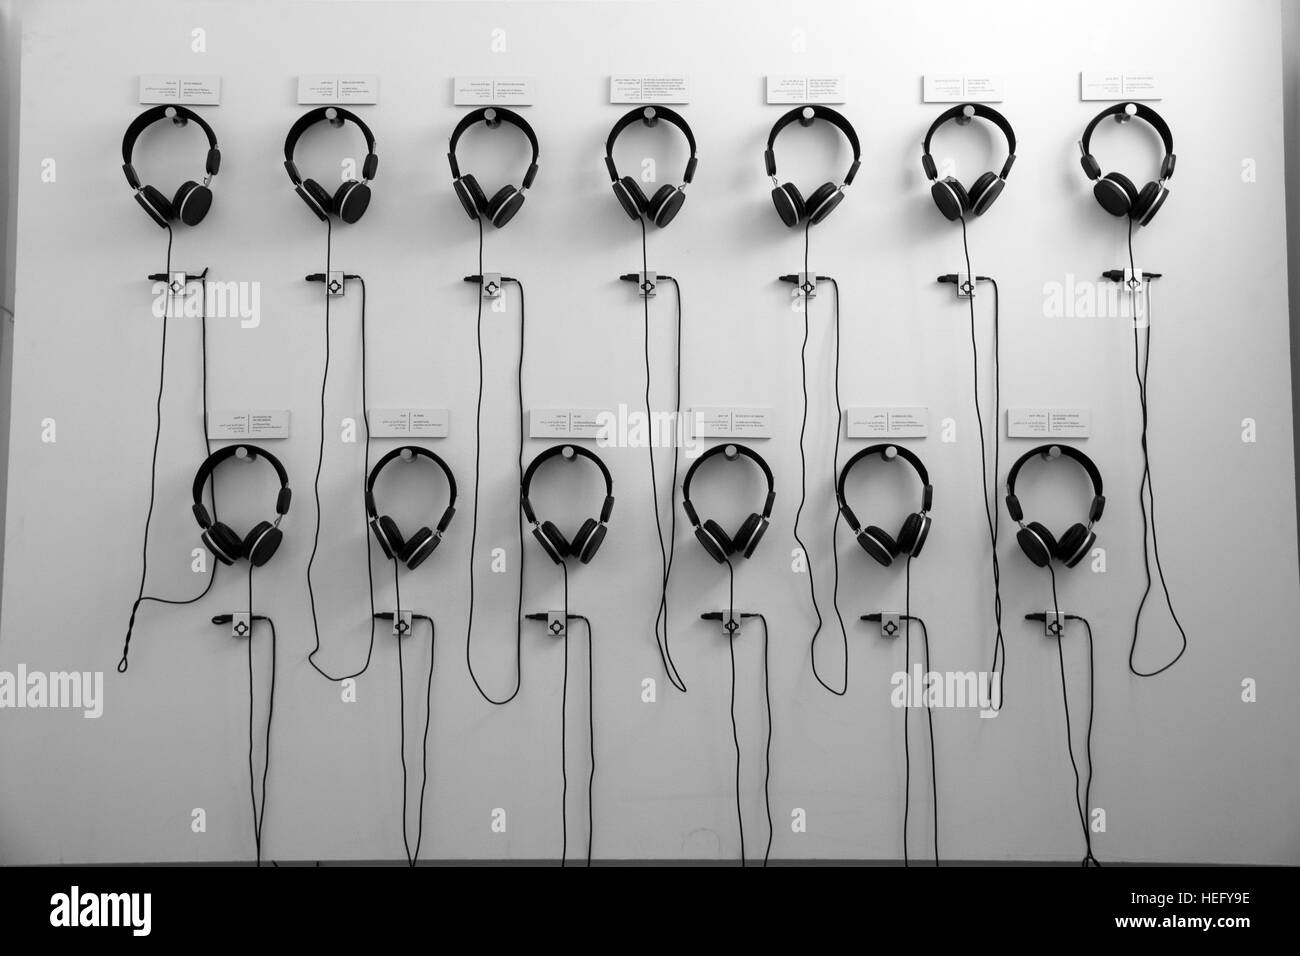 Headphones on a wall Stock Photo